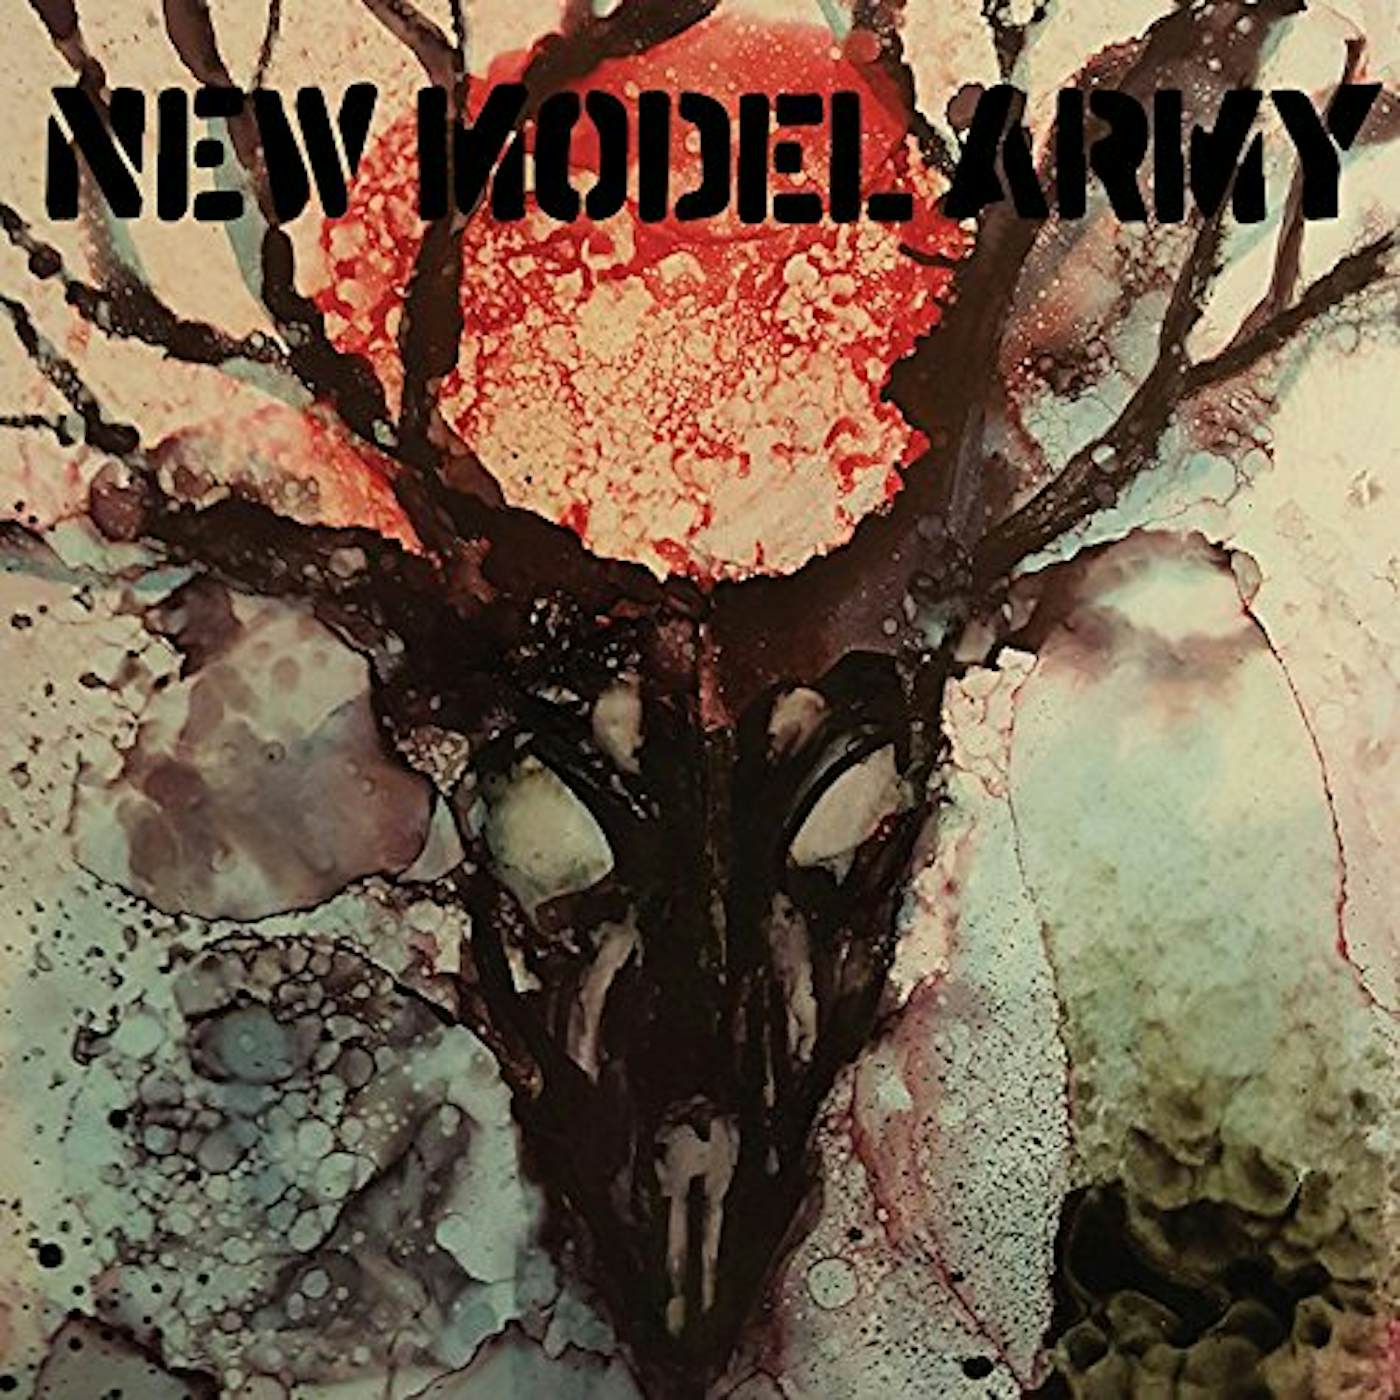 New Model Army Winter Vinyl Record